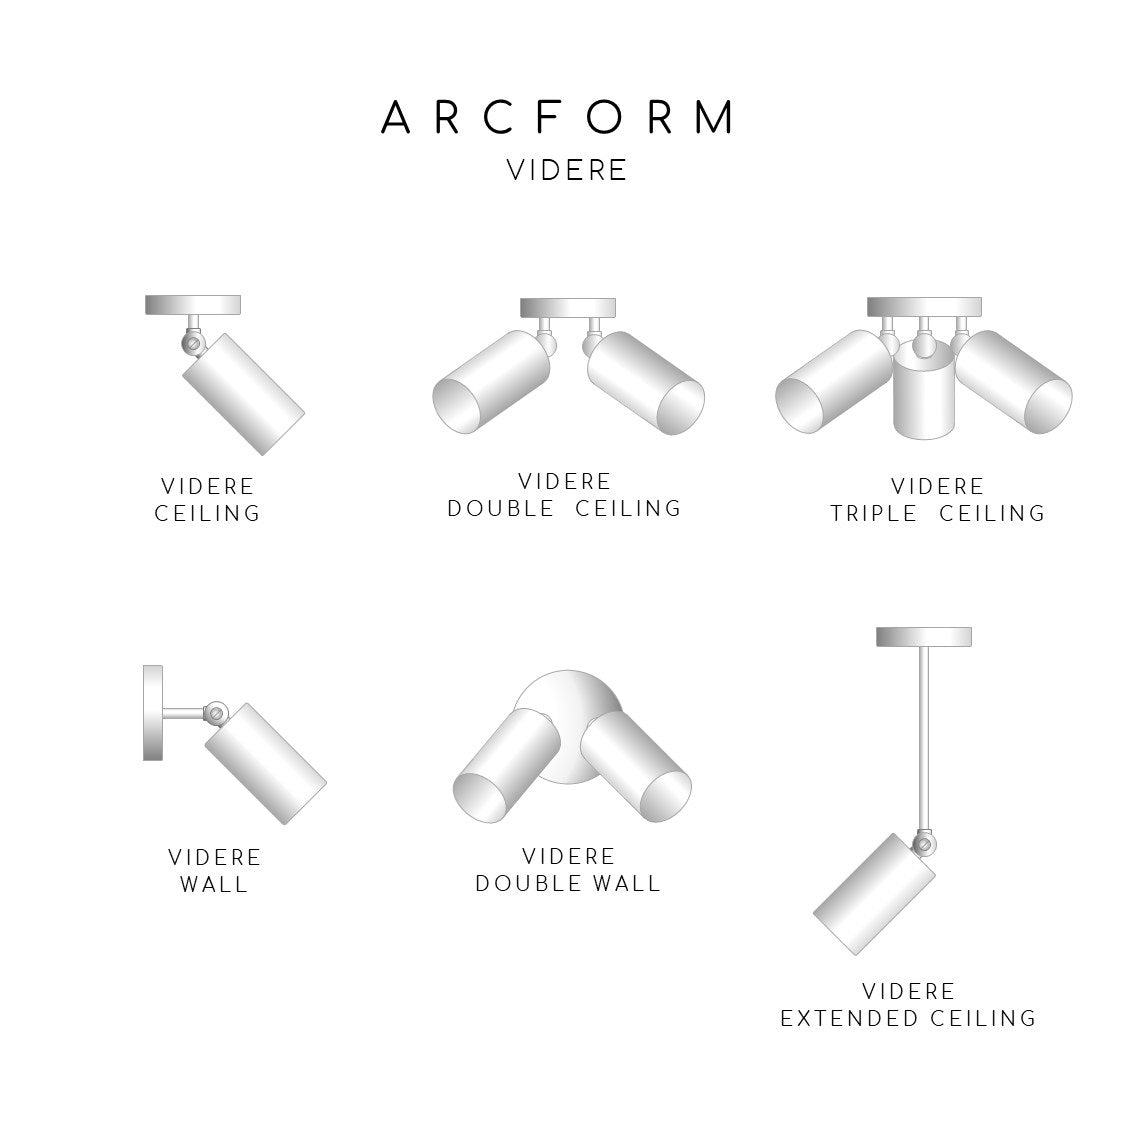 Arcform VIDERE Lighting range available from South Charlotte Fine Lighting